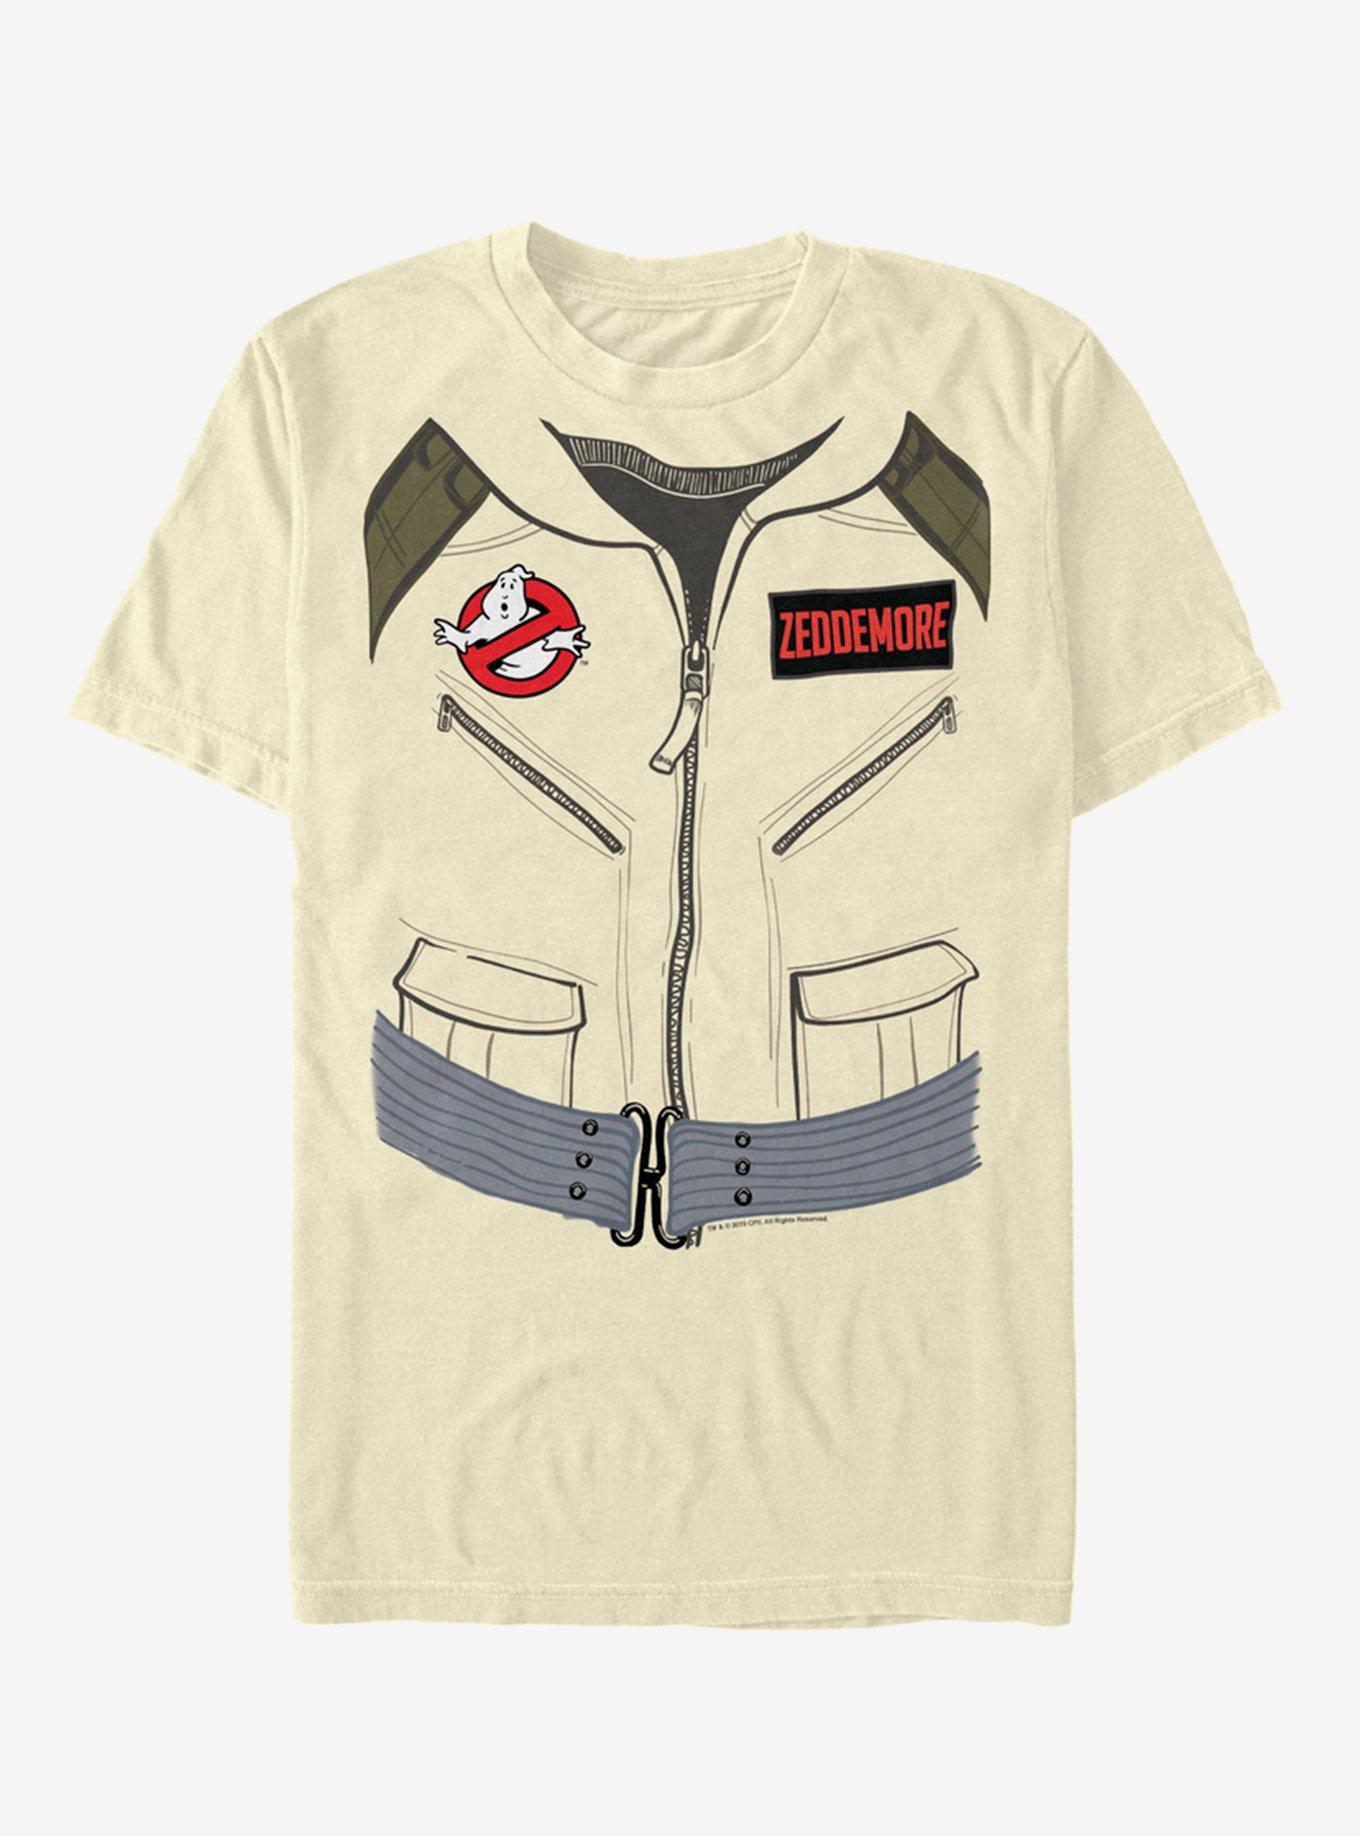 Ghostbusters Costume Zeddemore T-Shirt